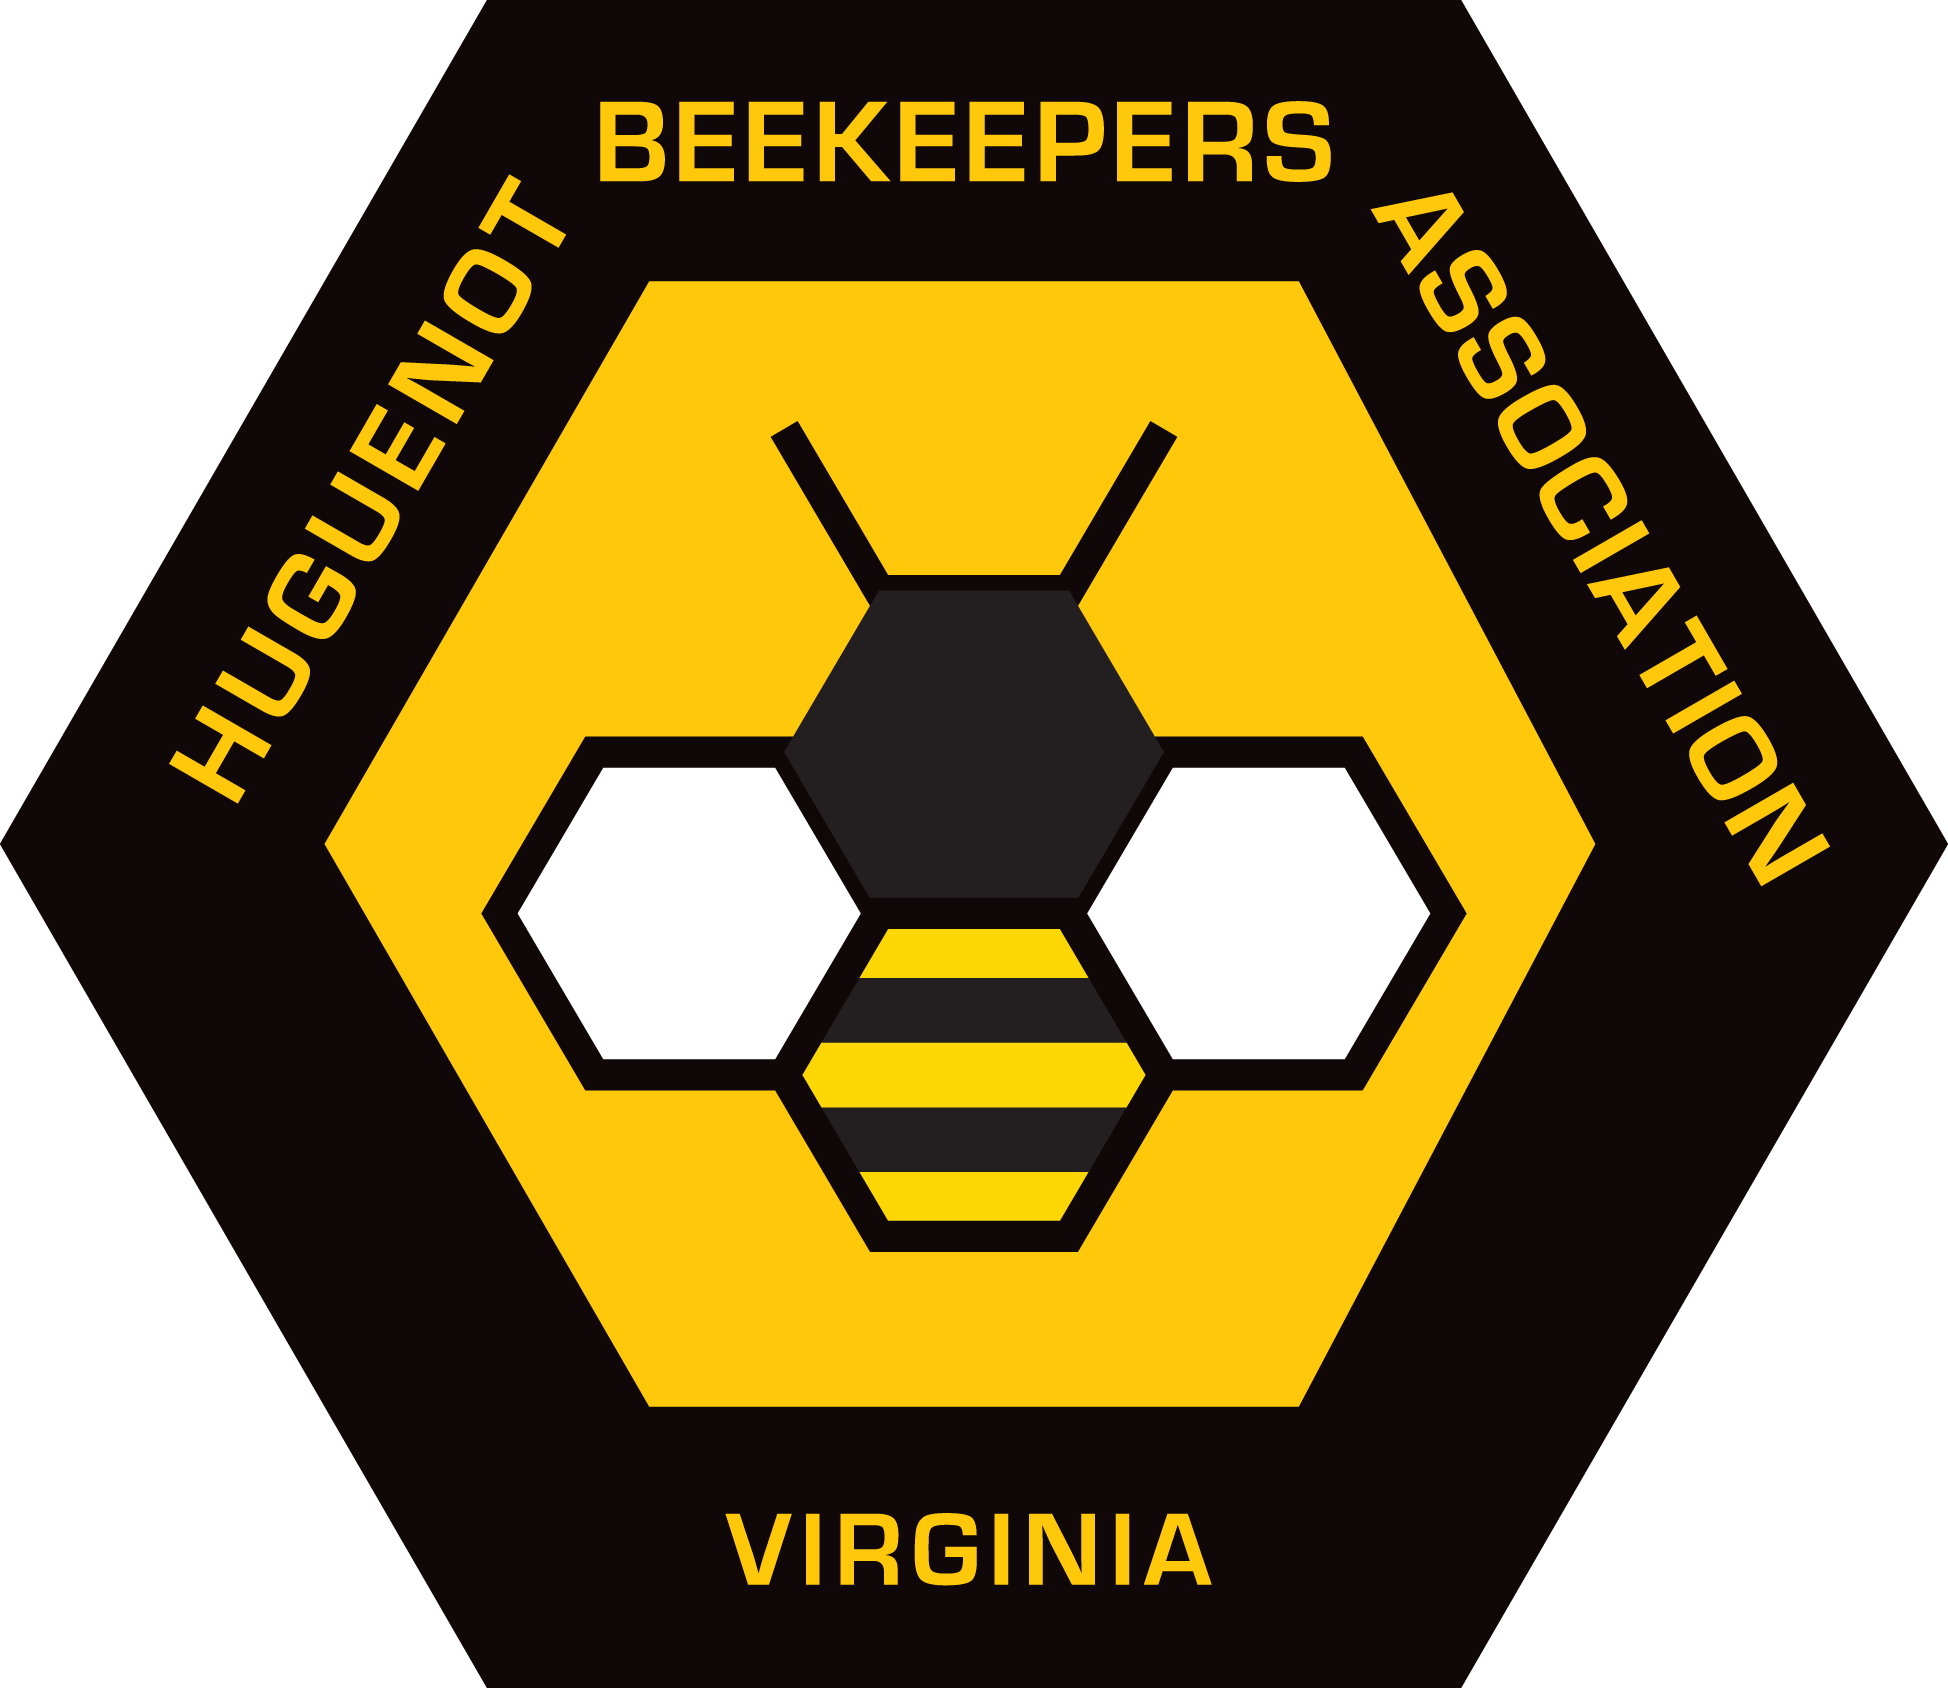 HBA Logo